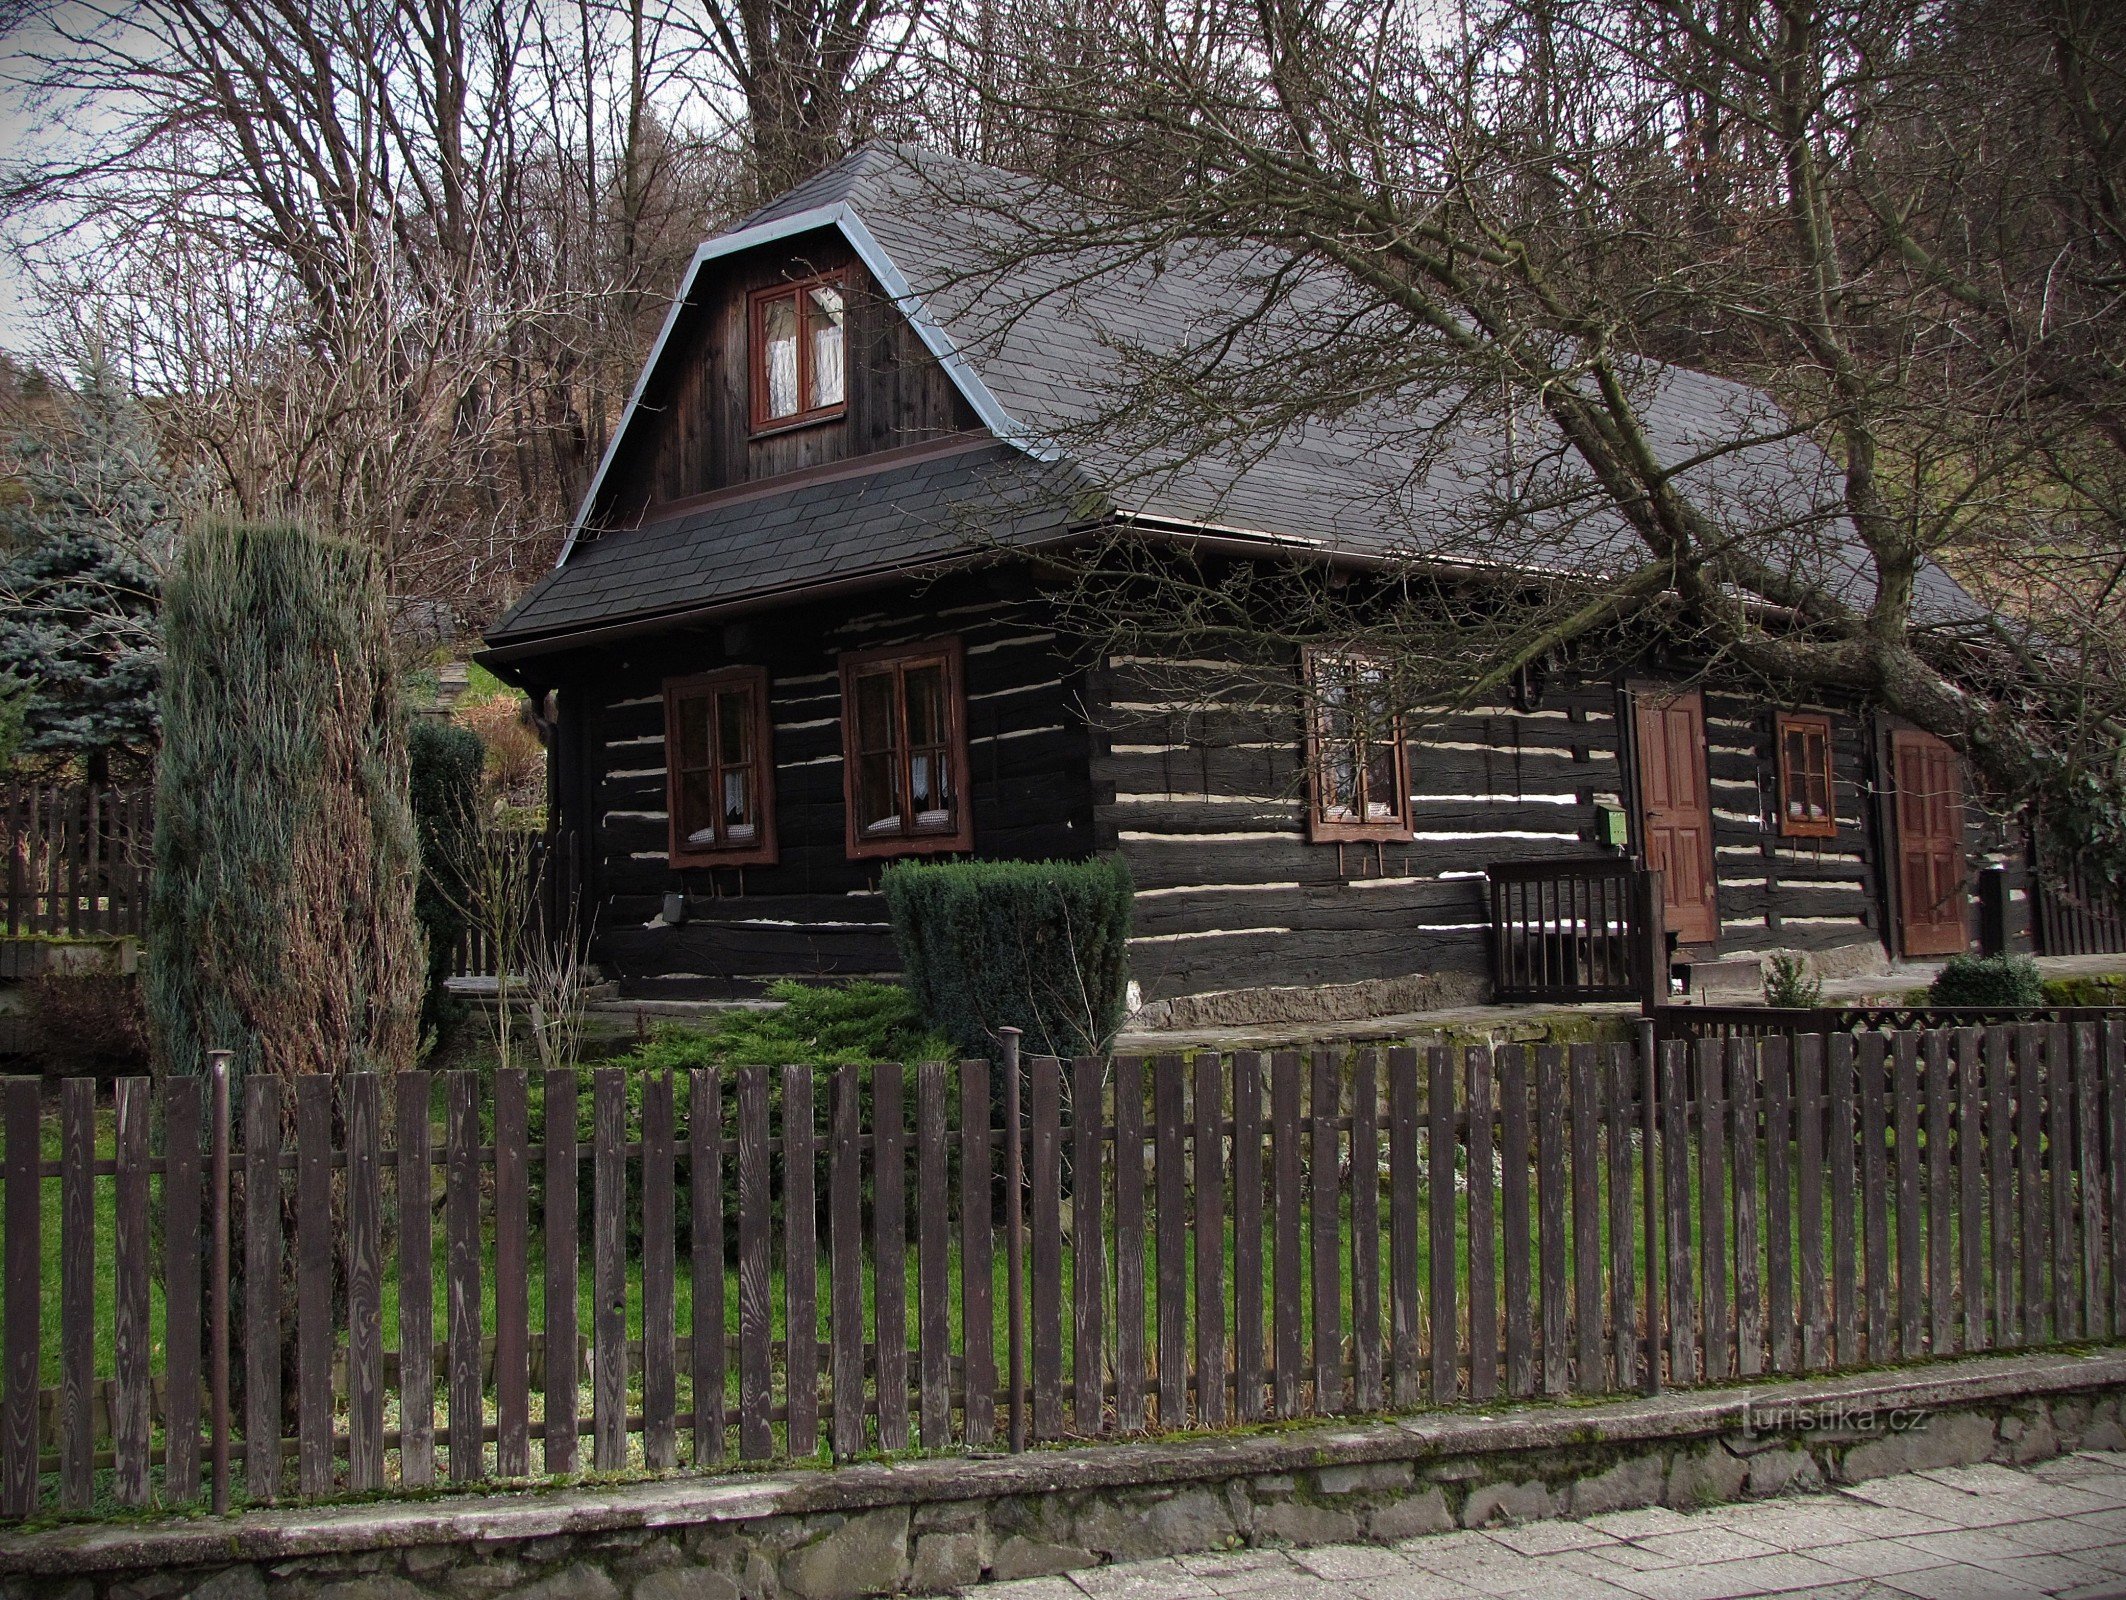 En gåtur gennem landsbyen Vlčková